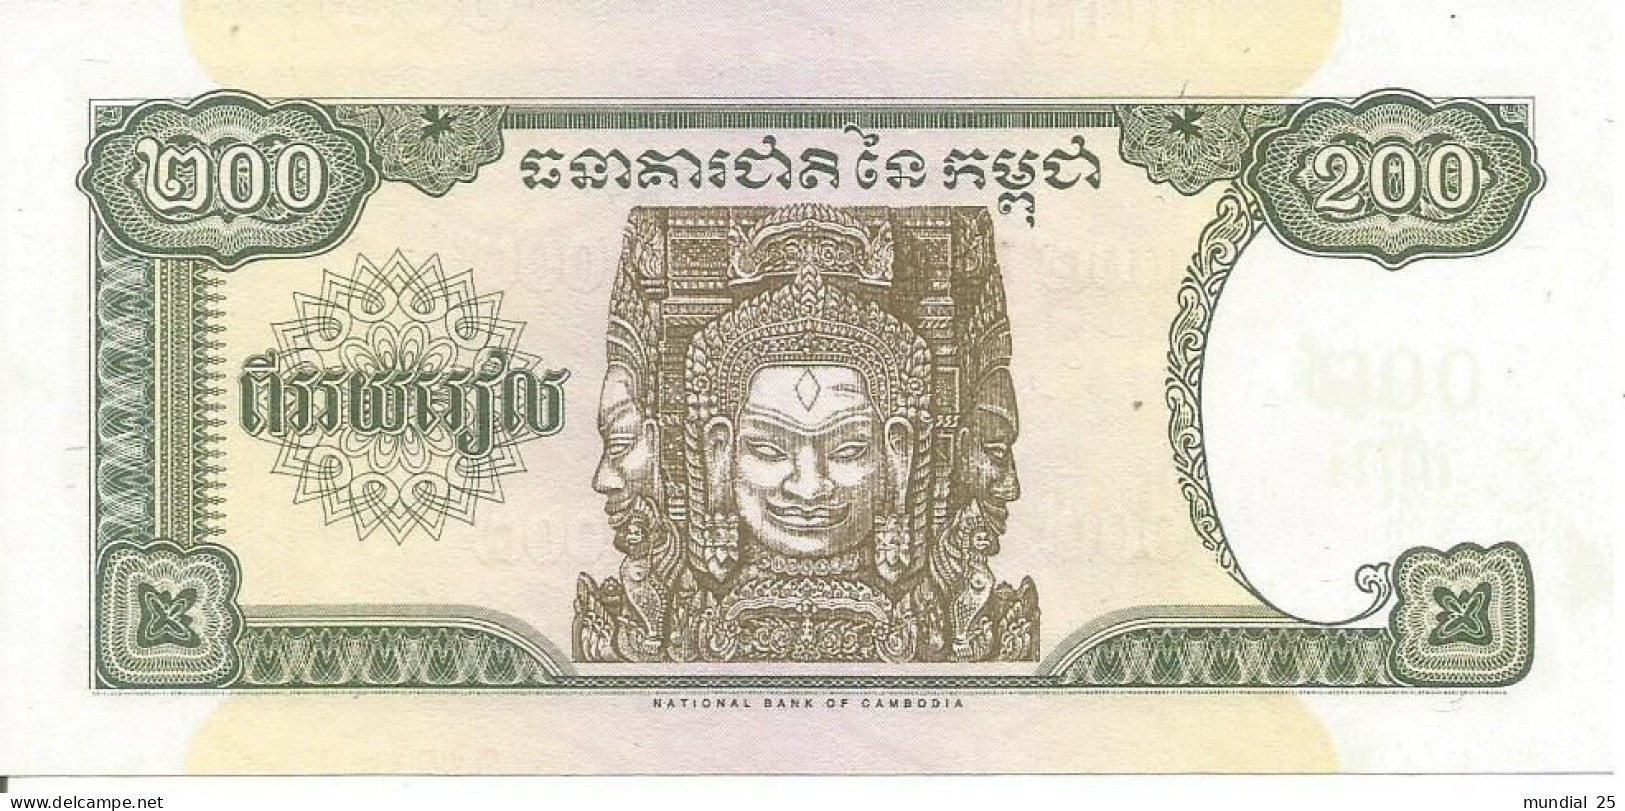 2 CAMBODIA NOTES 200 RIELS 1998 - Cambodge